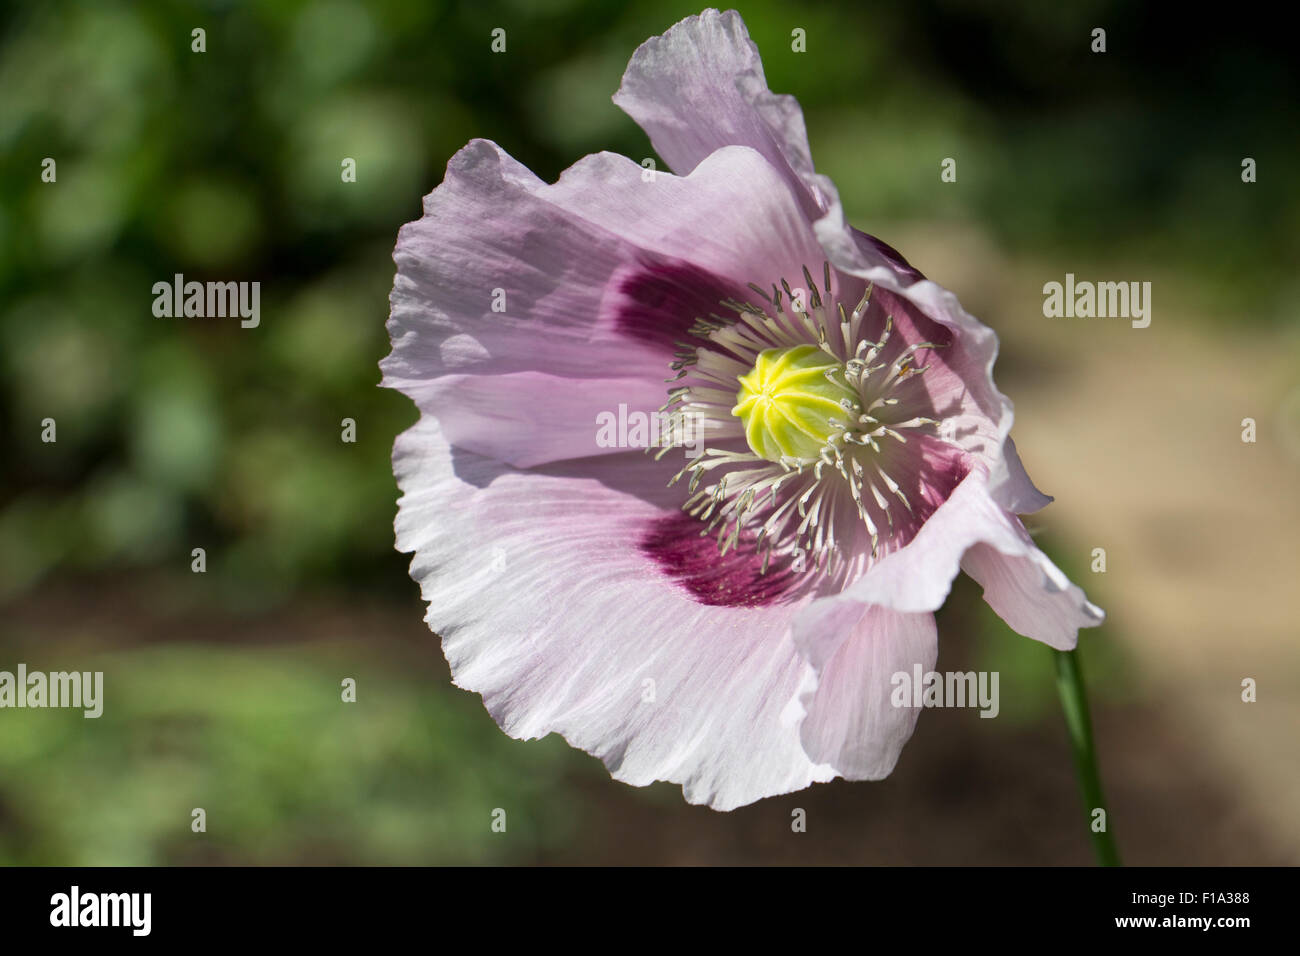 Flor de amapola morada fotografías e imágenes de alta resolución - Alamy